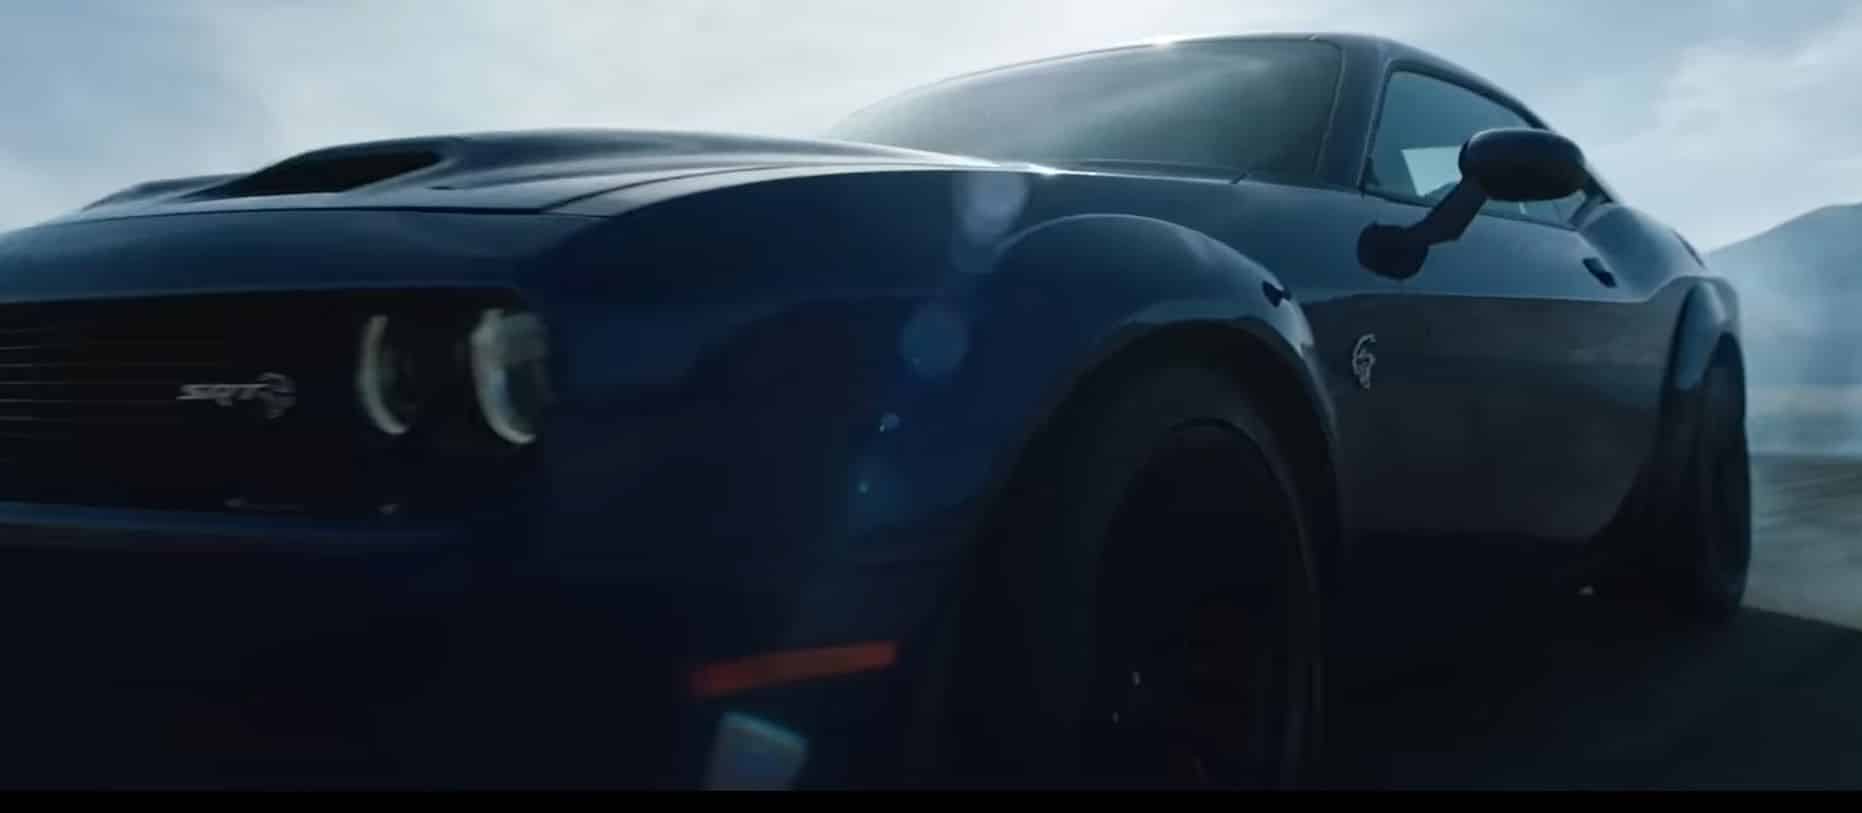 Dodge IN//OUT, così il Brand arriva in Europa [VIDEO]